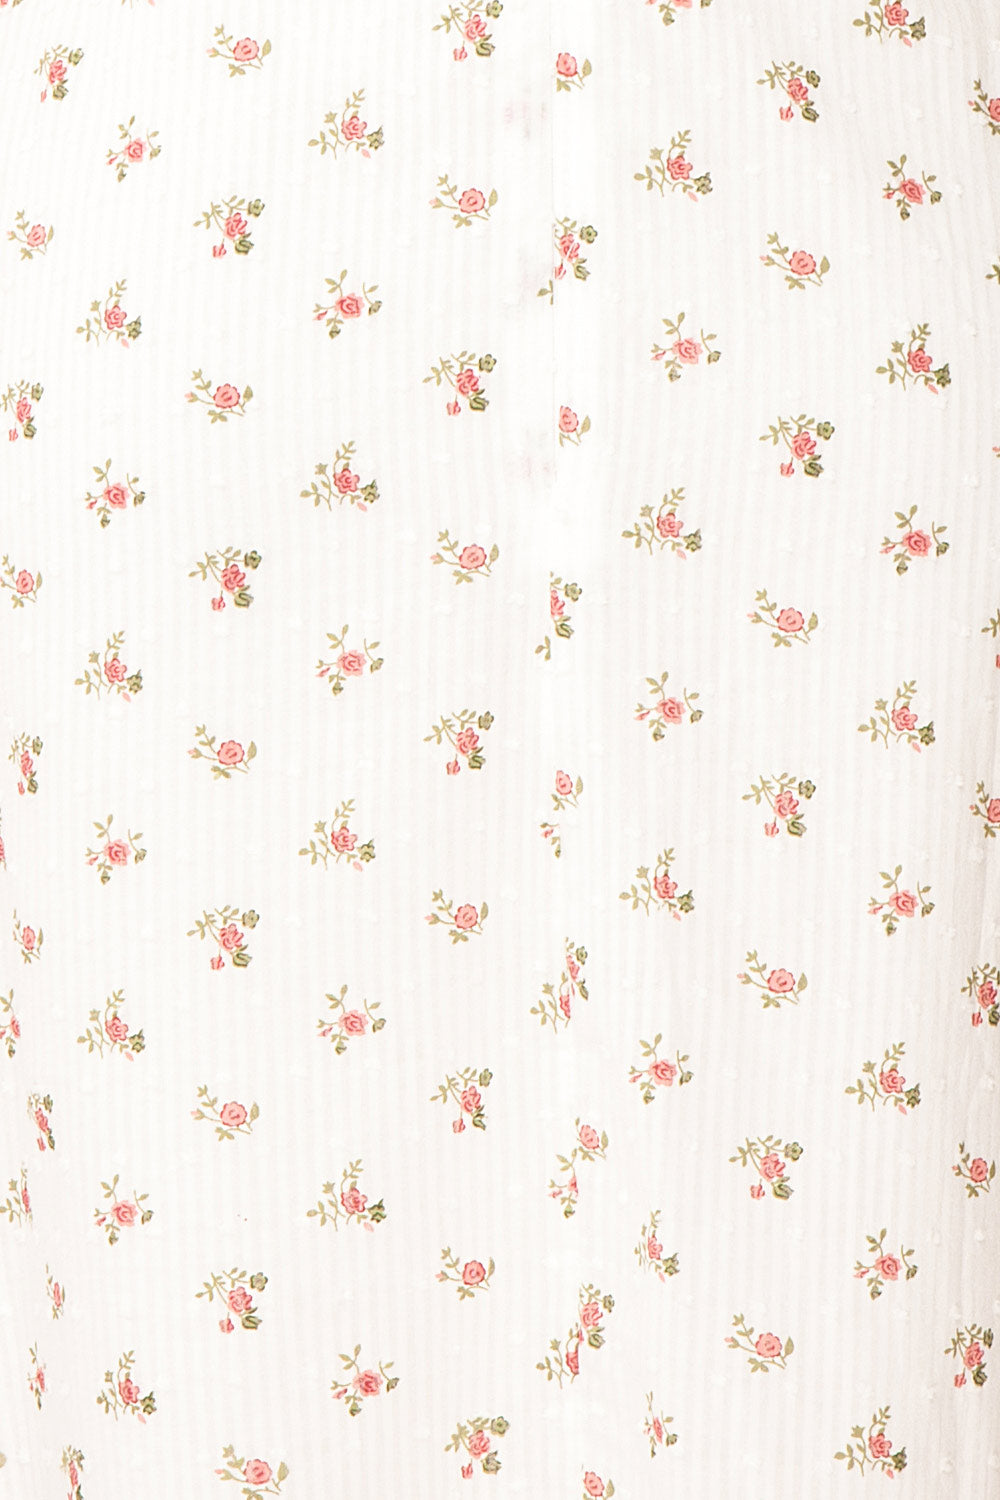 Marva White Floral V-Neck Short Sleeve Dress | Boutique 1861 fabric 